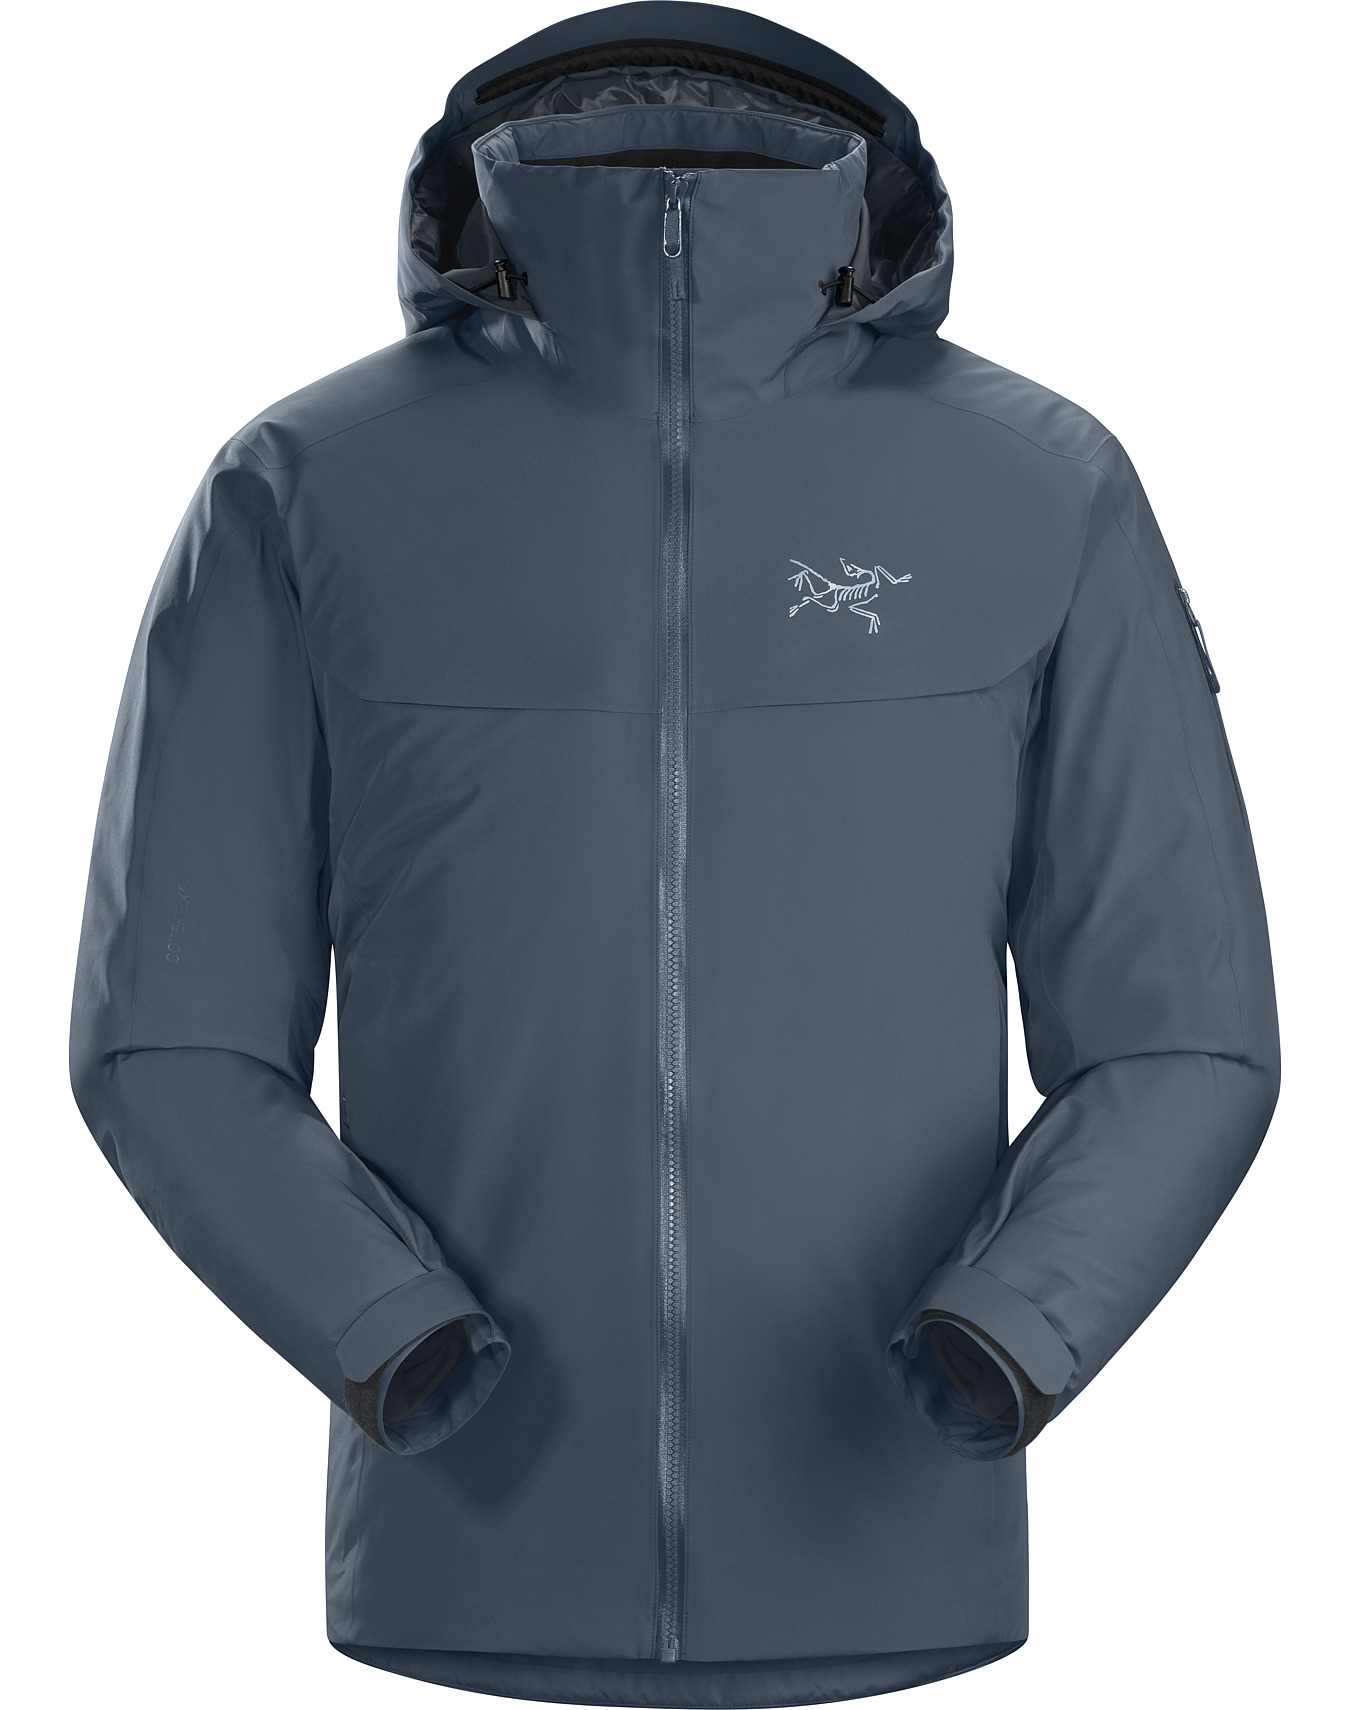 Arc'teryx Macai Jacket, men's, Fall 2017 colors of discontinued model ...